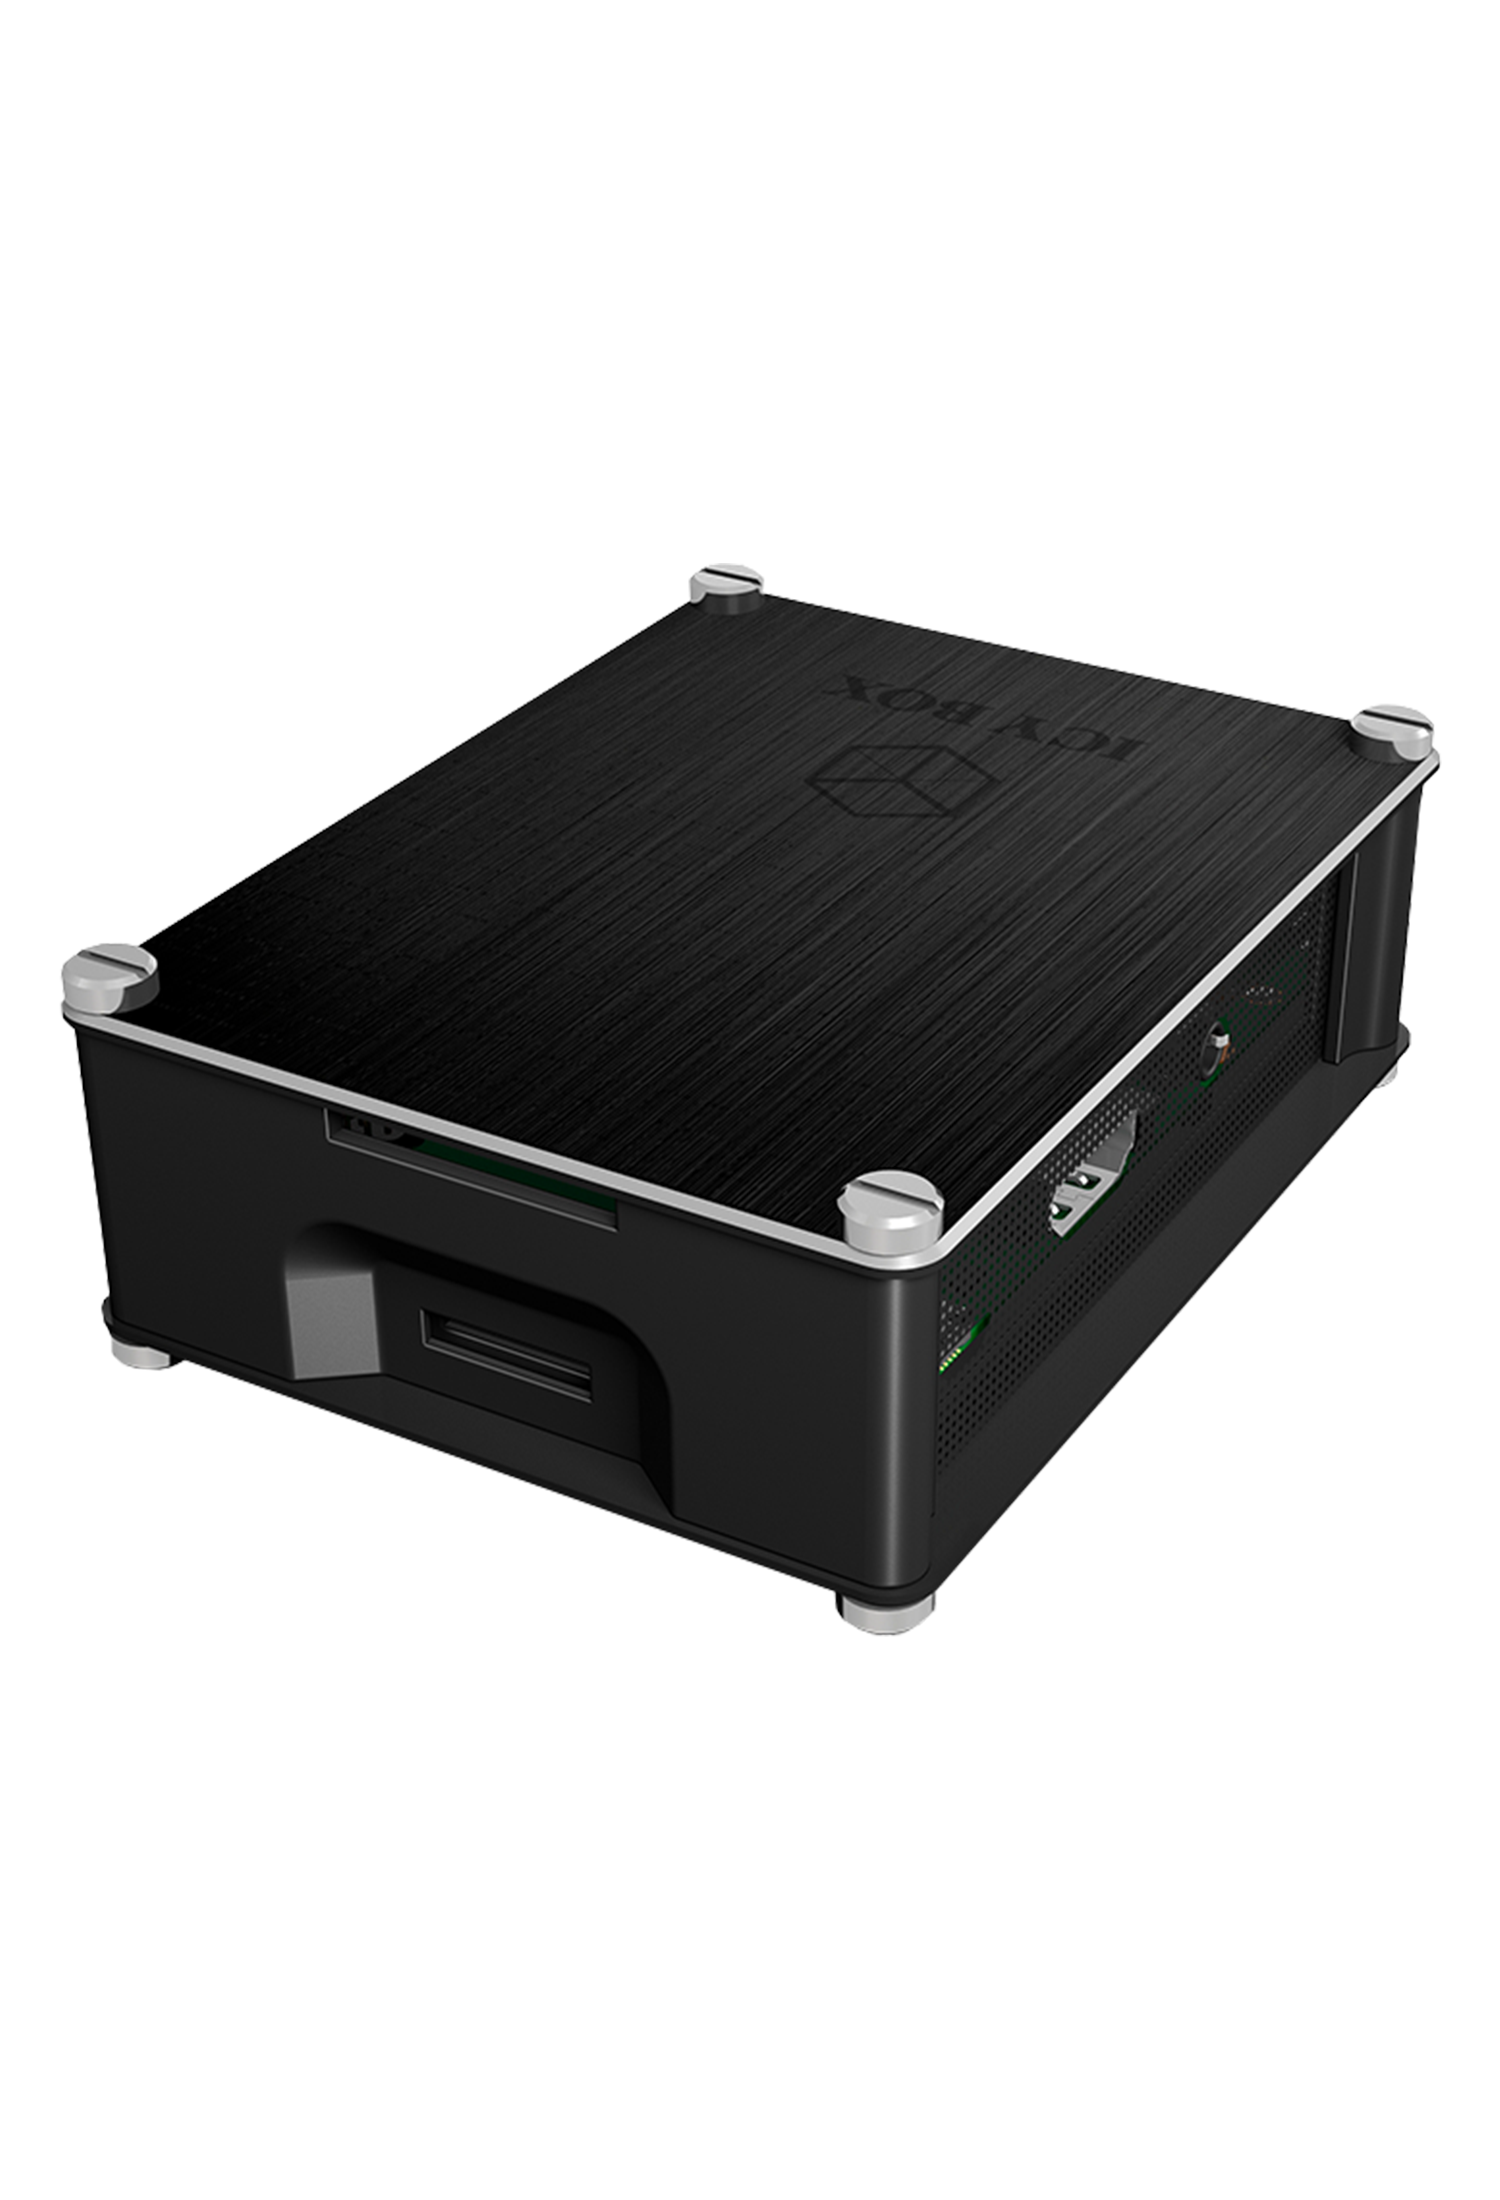 ICY BOX-RP102 Gehäuse für Raspberry Pi 2B & 3B